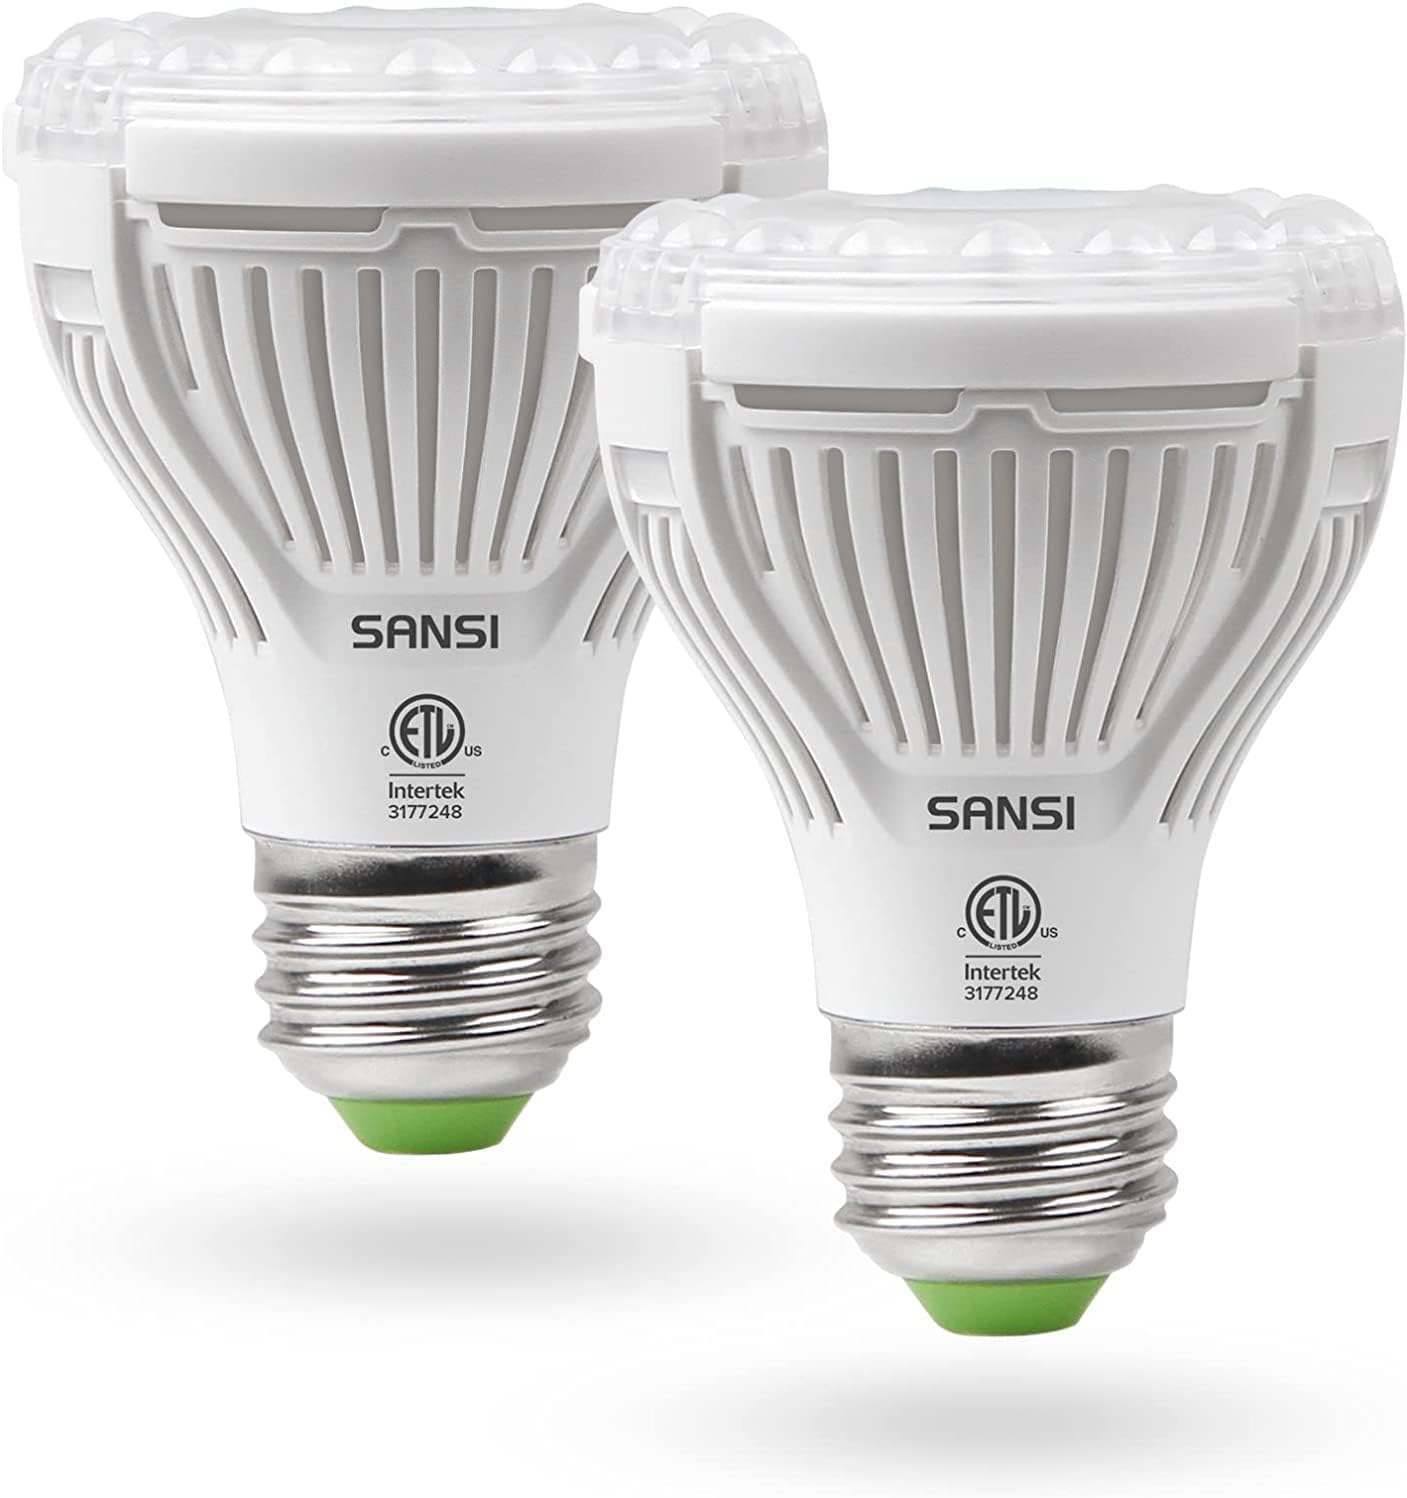 SANSI LED Grow Light Bulb for Seeds and Greens, Full [...]